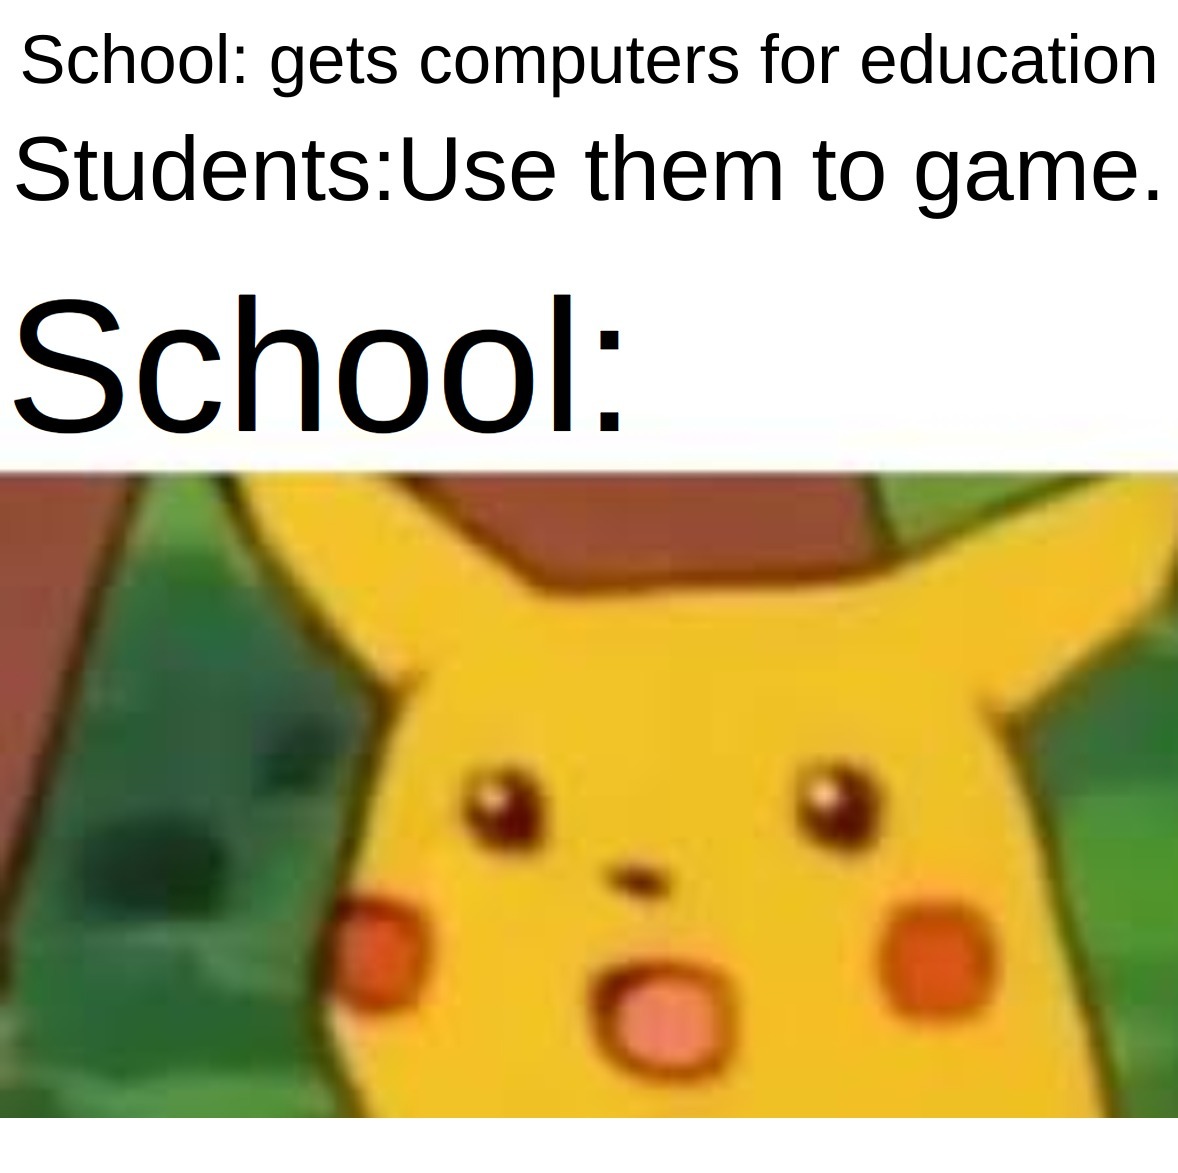 School Computers be like - meme